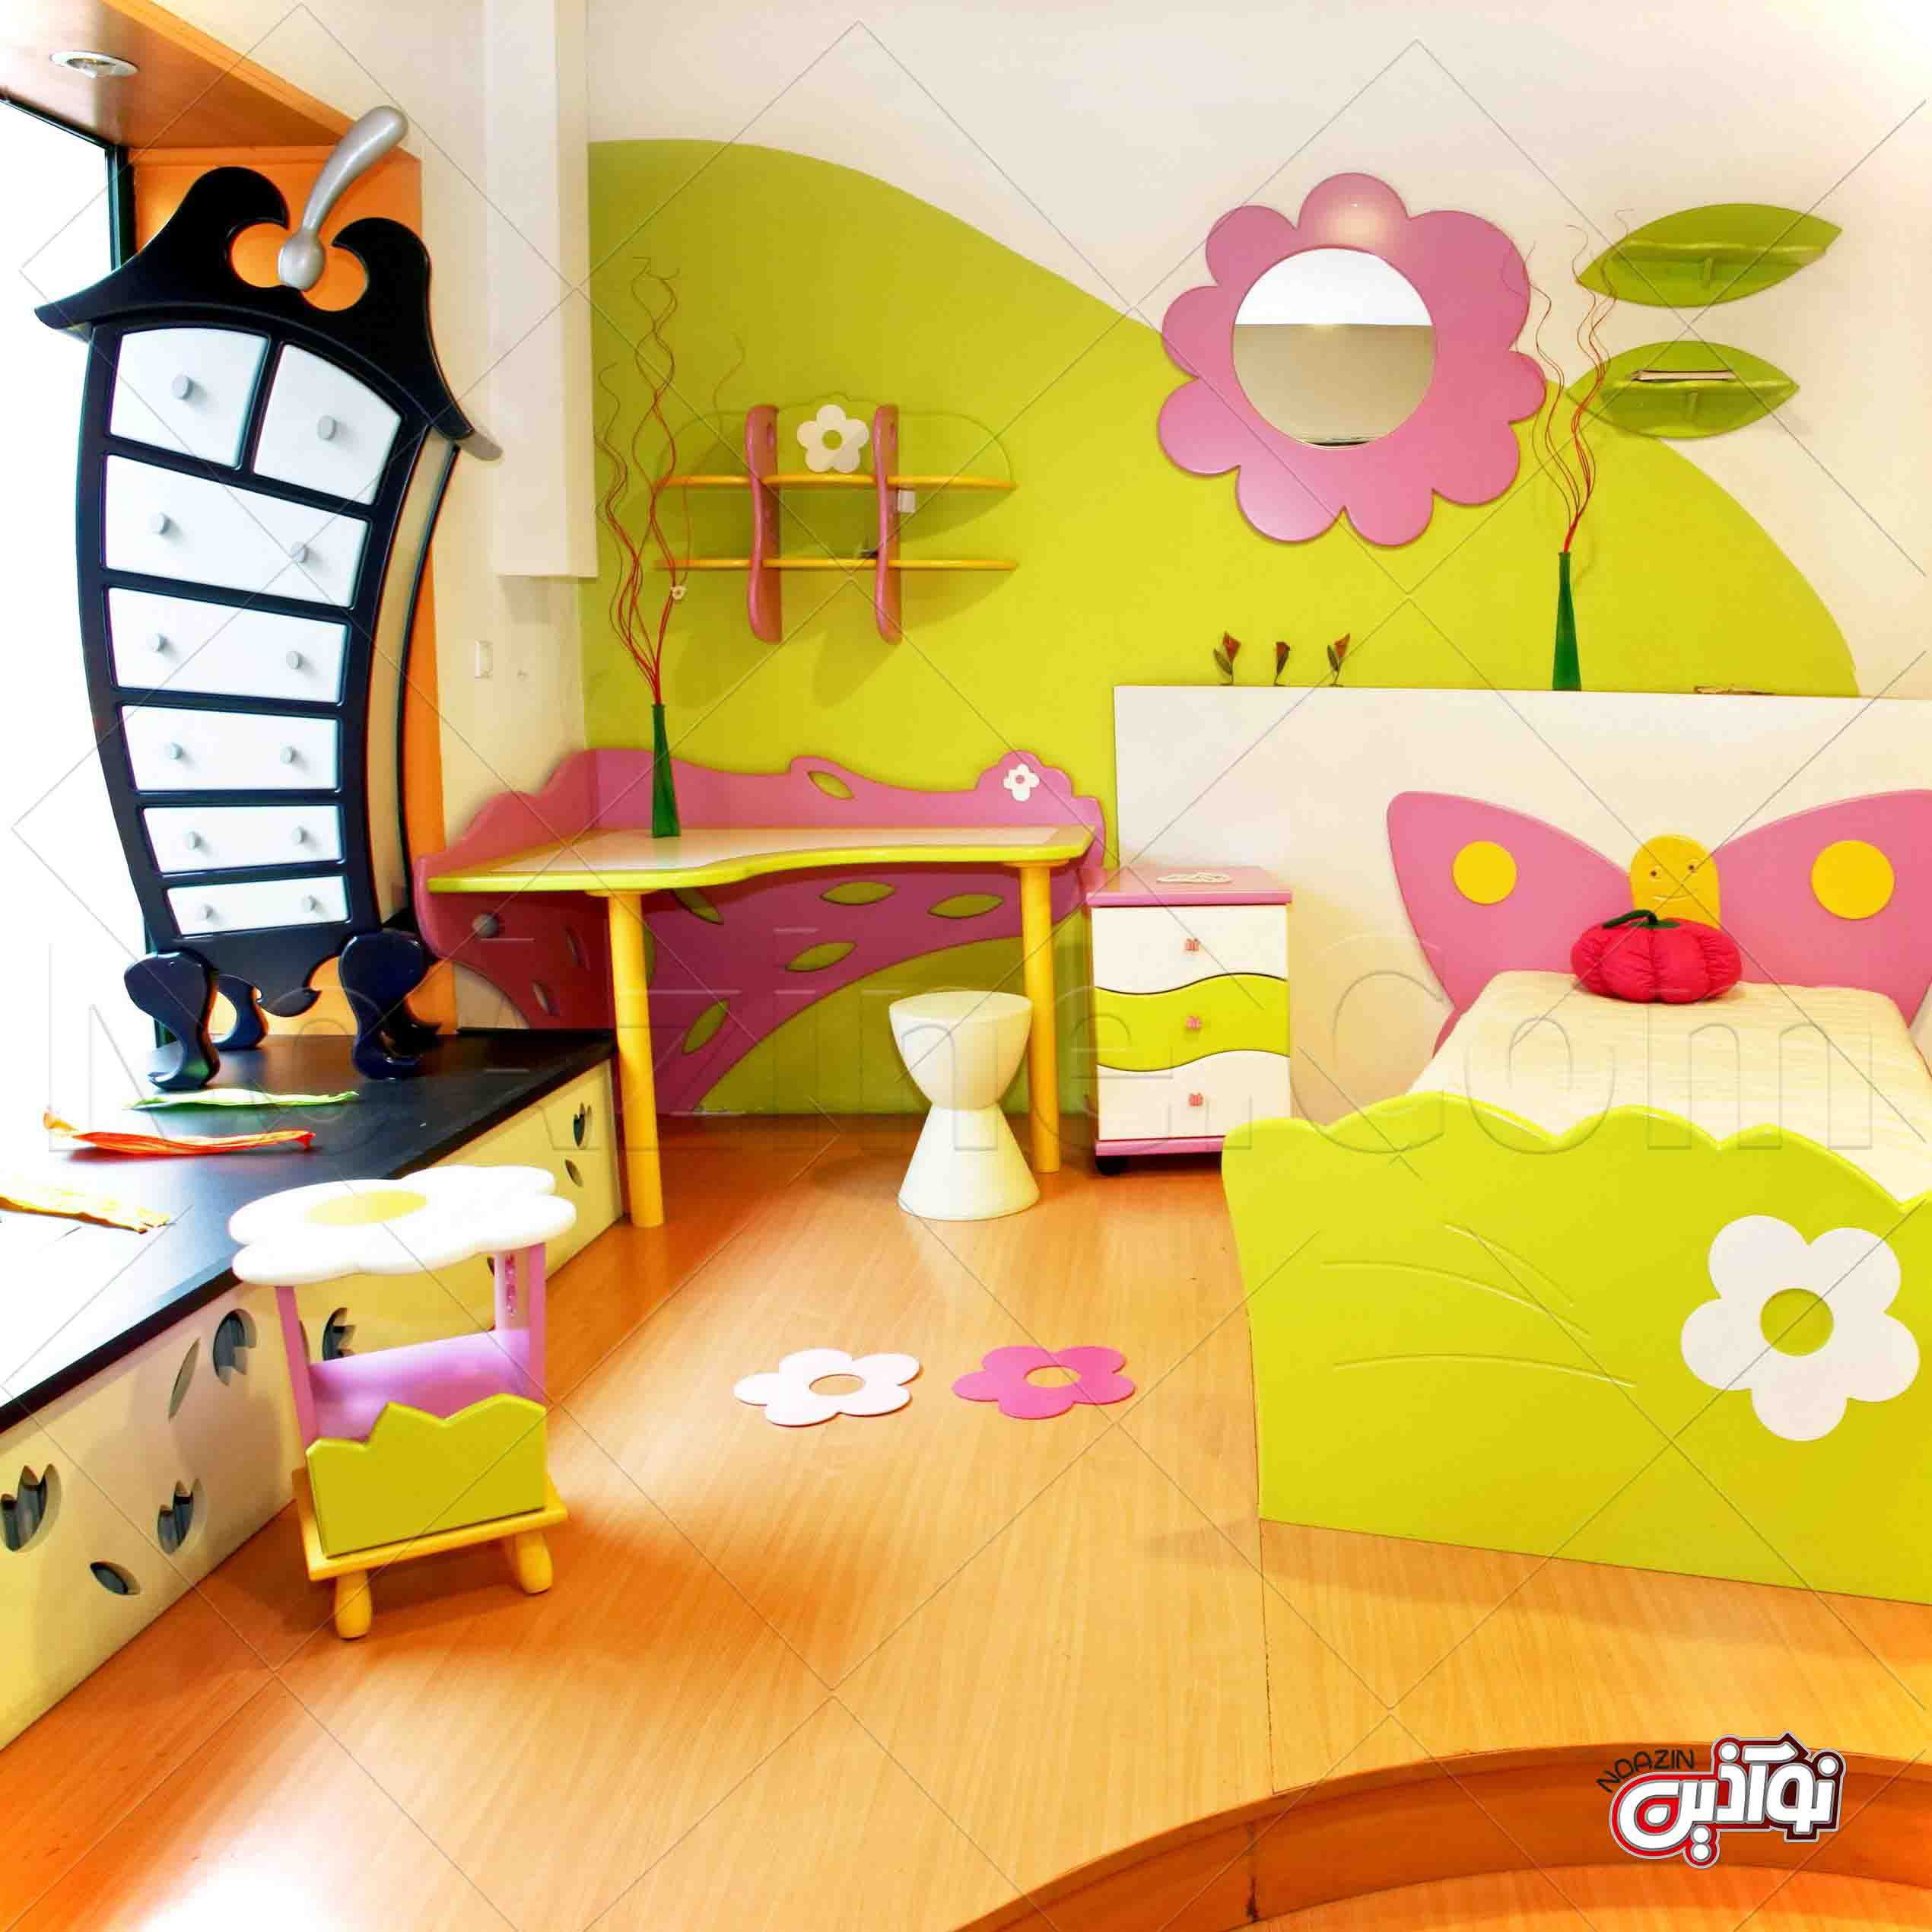 اتاق کودک, دکوراسیون اتاق کودک, دکوراسیون اتاق بچه, اتاق بچه, دکوراسیون اتاق, طرح کودک, رنگ اتاق کودک, طراحی اتاق کودک, طراحی اتاق, طراحی کودک, طرح اتاق کودک, طراحی اتاق بچه, اتاق نوزاد, طراحی اتاق نوزاد, دکوراسیون اتاق نوزاد, طرح اتاق نوزاد, طراحی اتاق کودکان, اتاق کودکان,